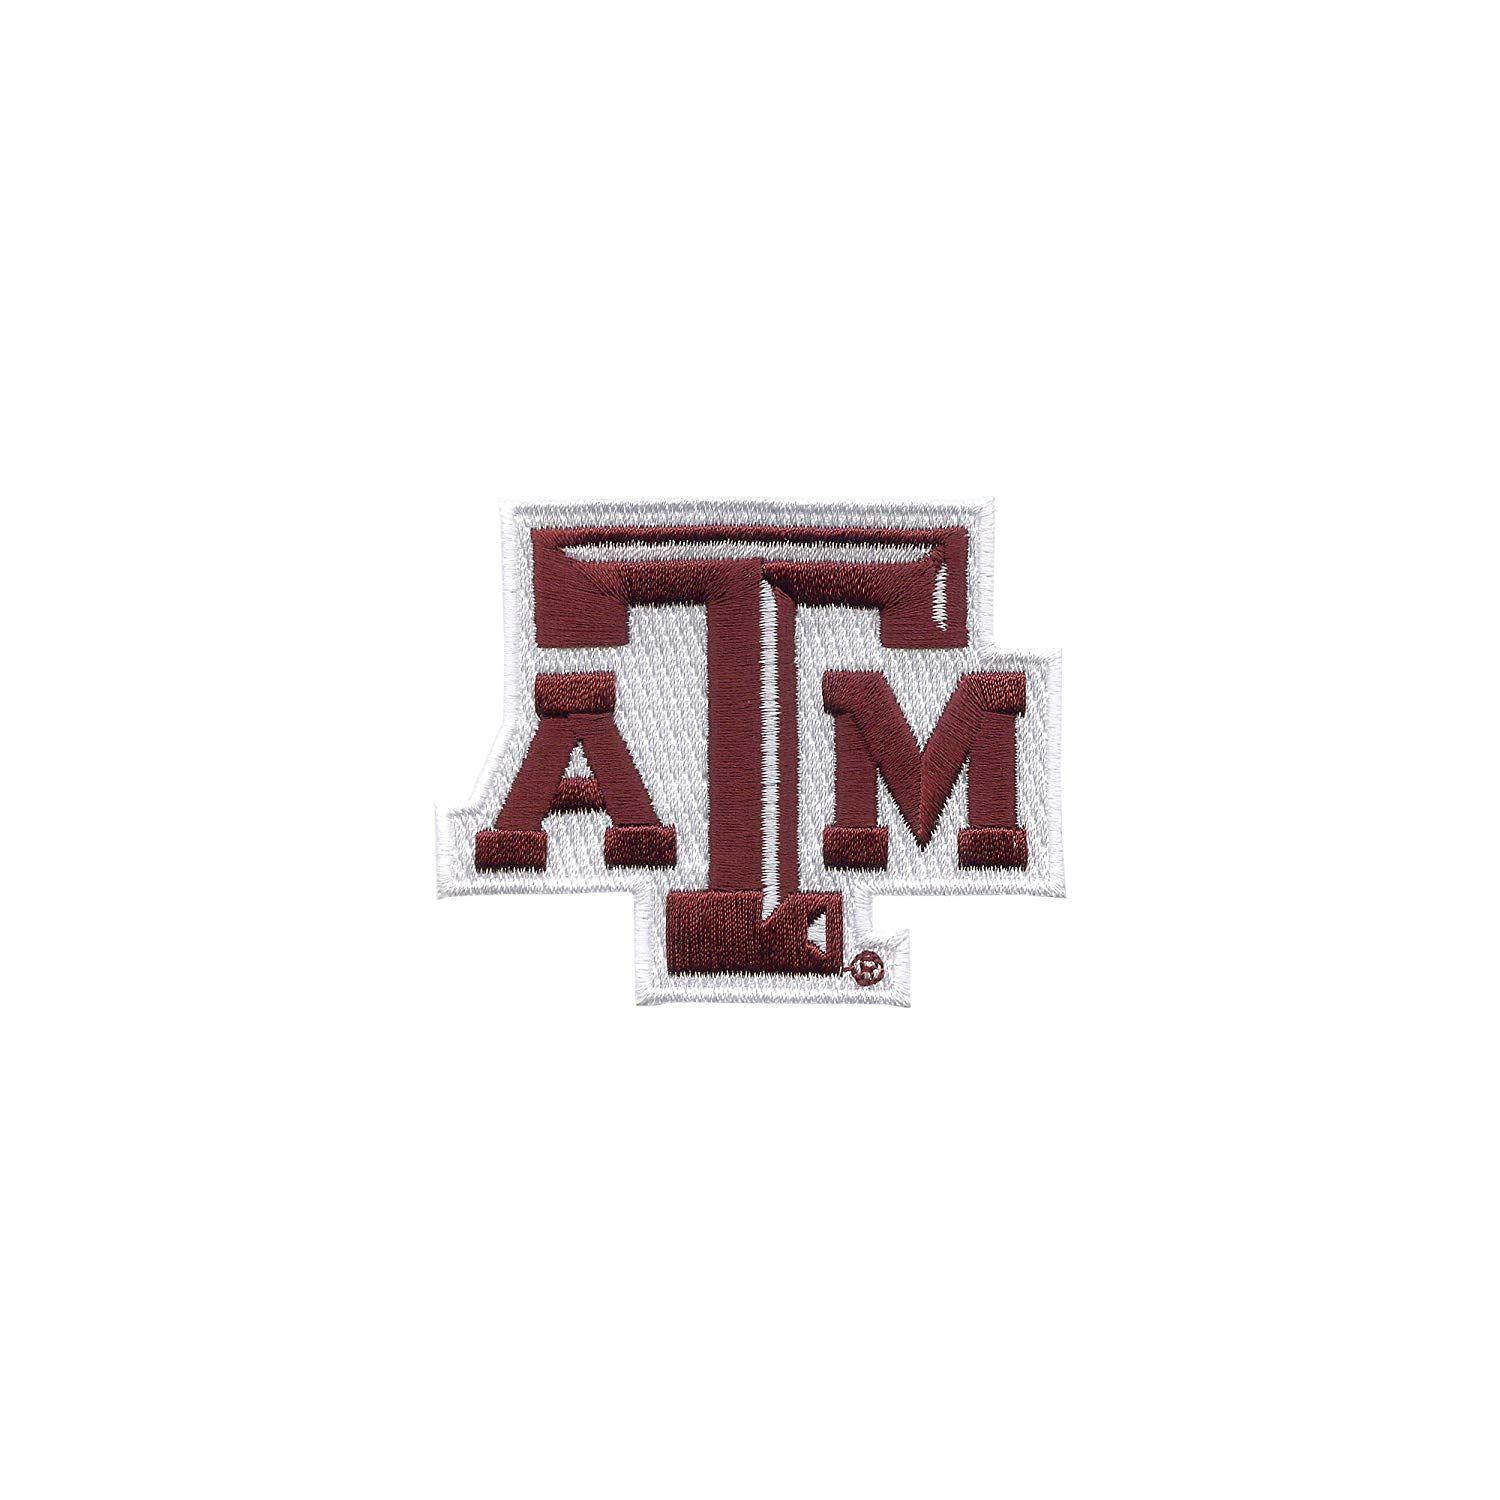 Aggies Logo - Amazon.com: Tervis 1056035 Texas A&M Aggies Logo Tumbler with Emblem ...